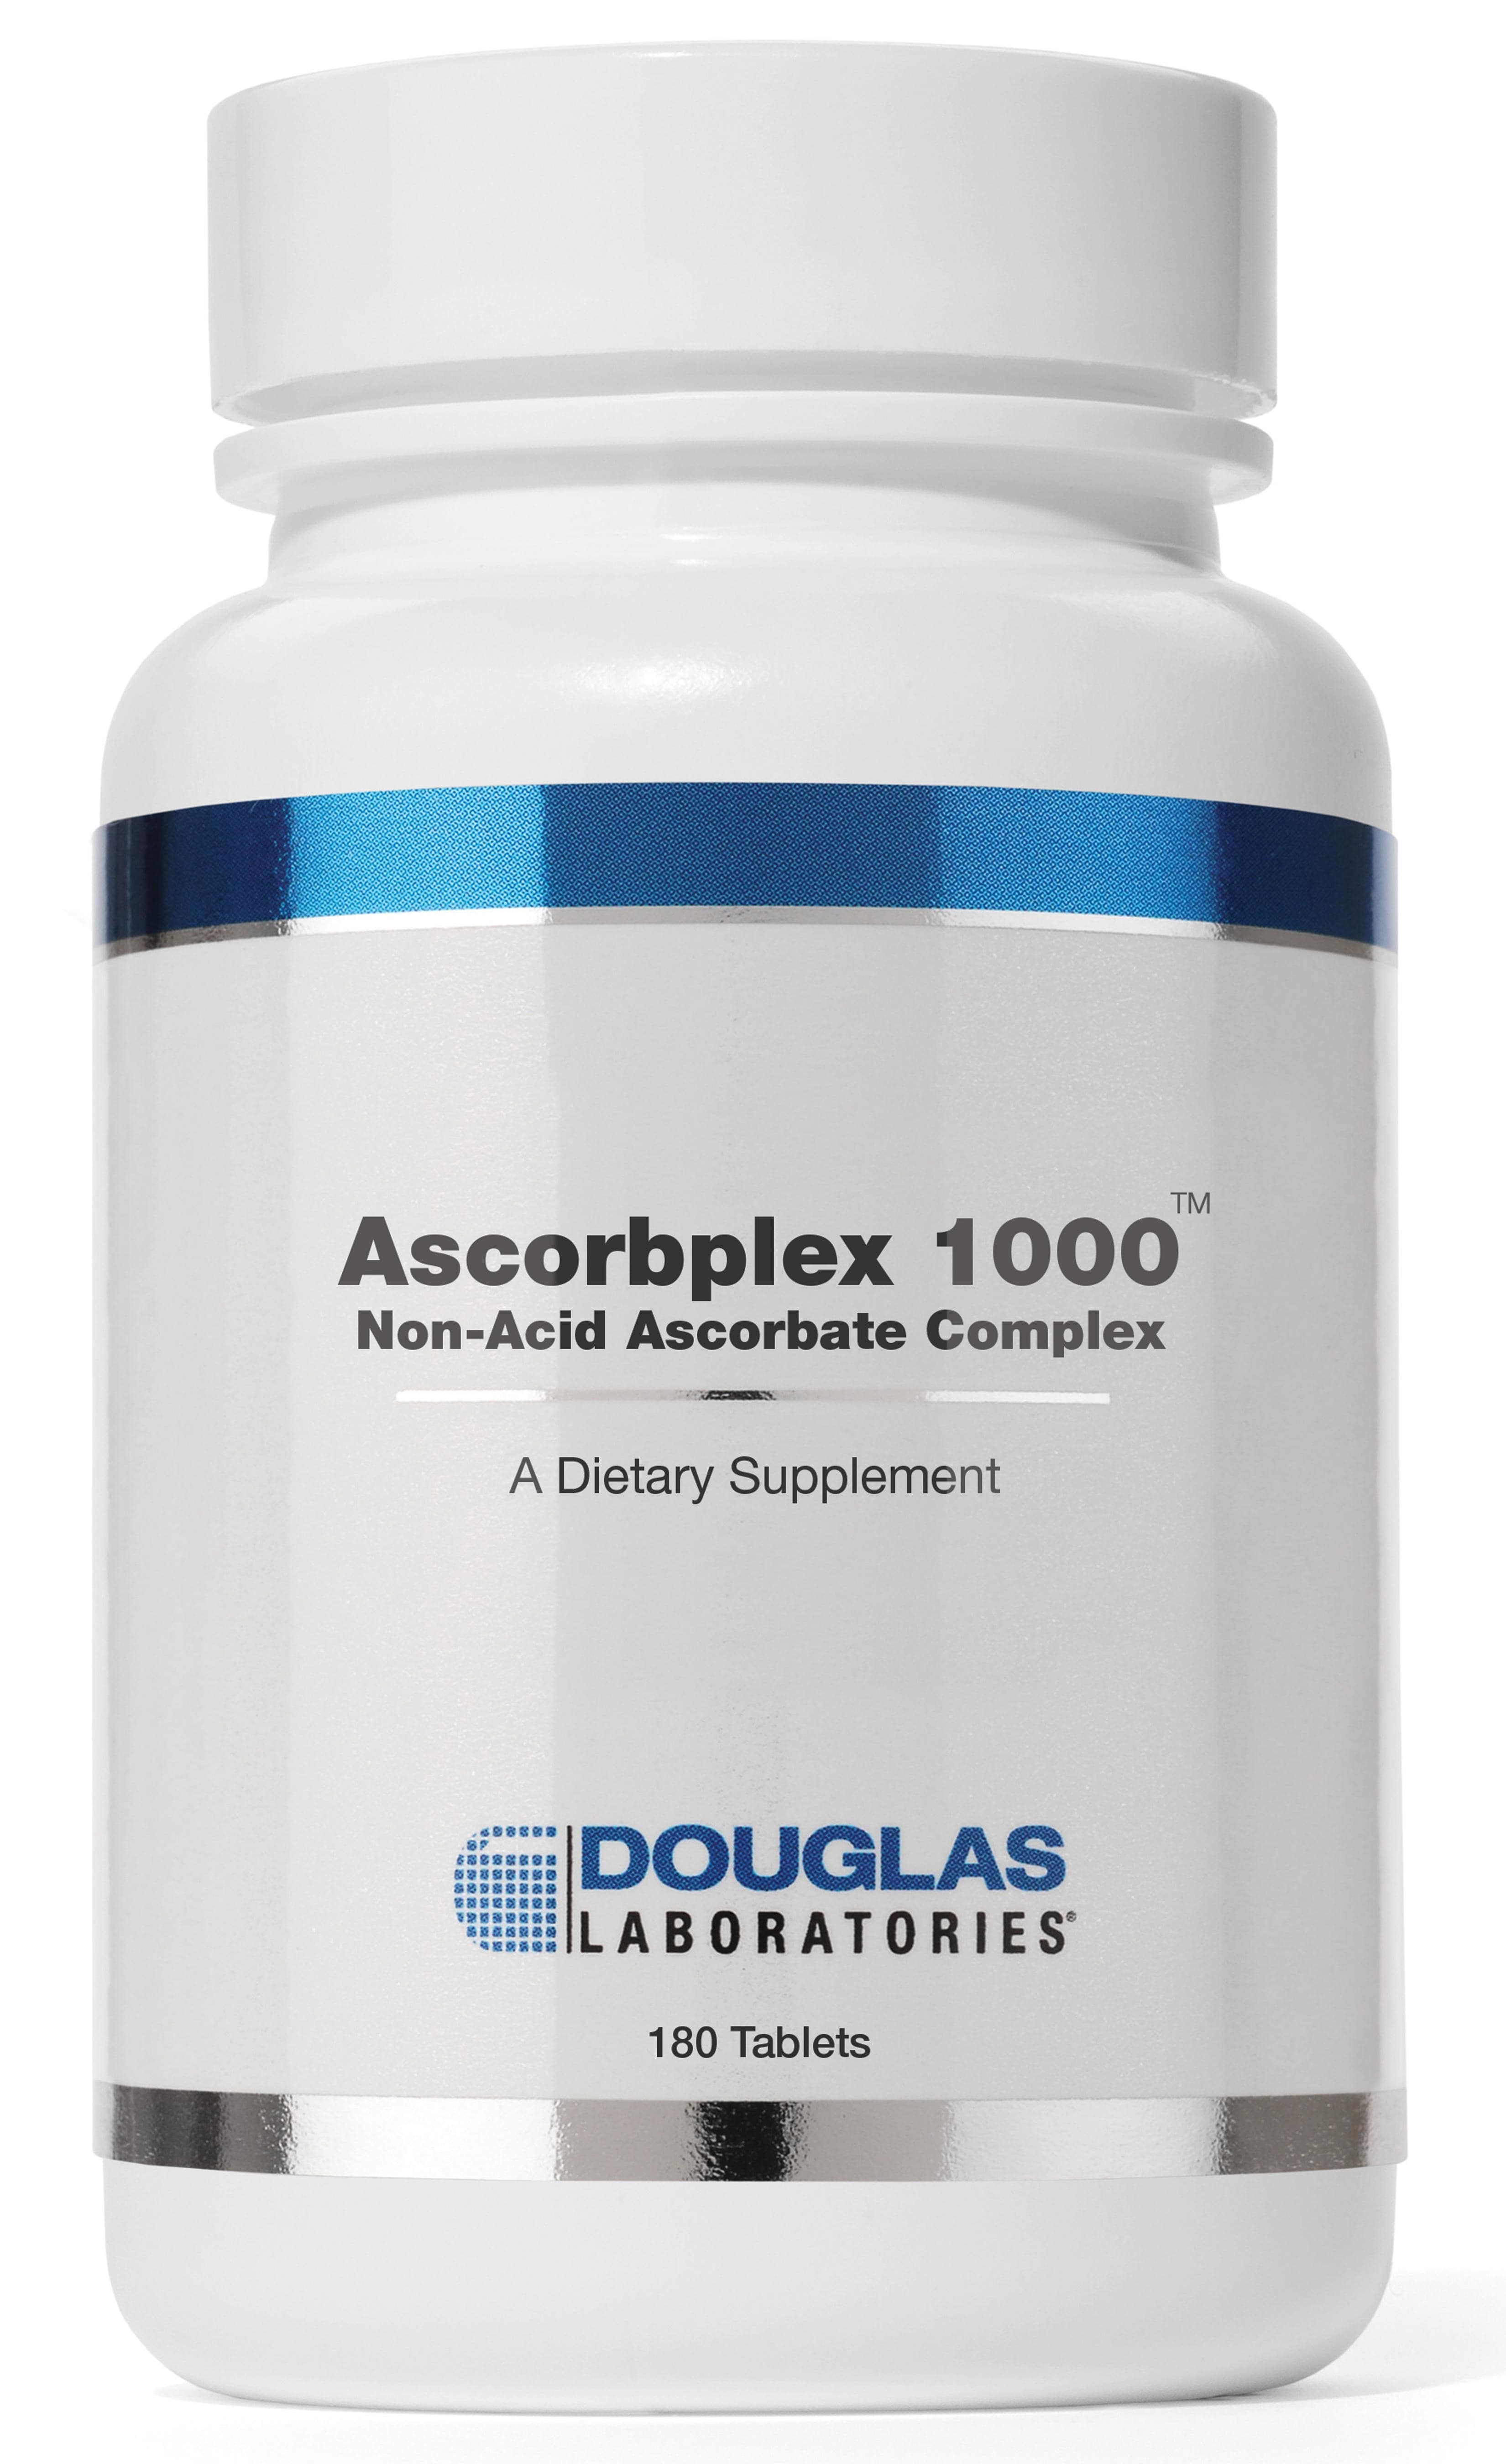 Douglas Laboratories Ascorbplex 1000